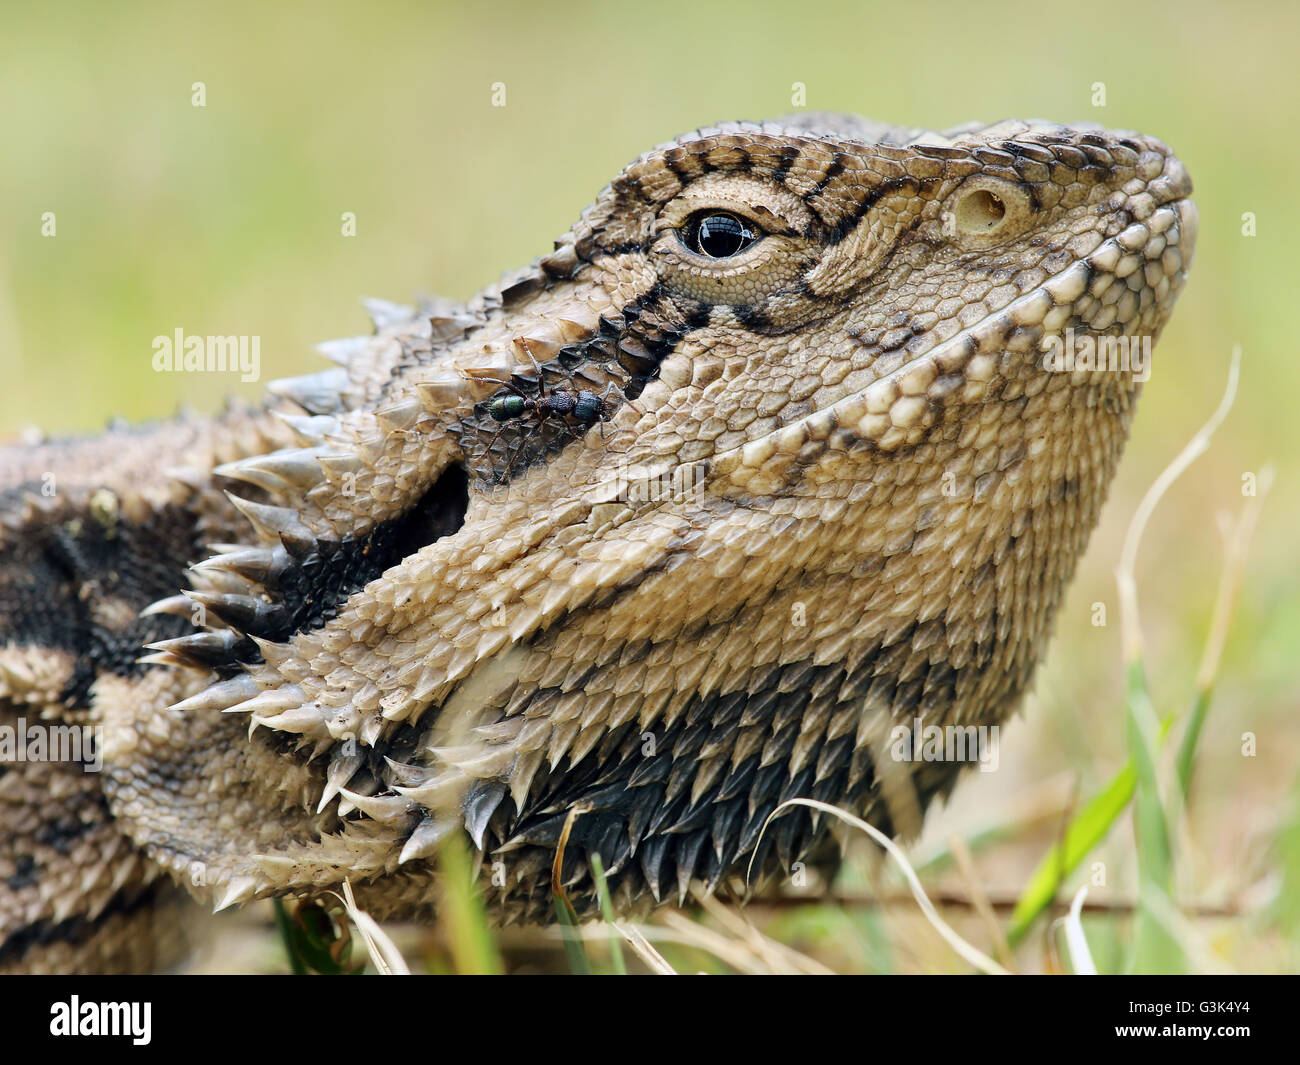 Eastern Bearded Dragon - Pogona barbata Stock Photo